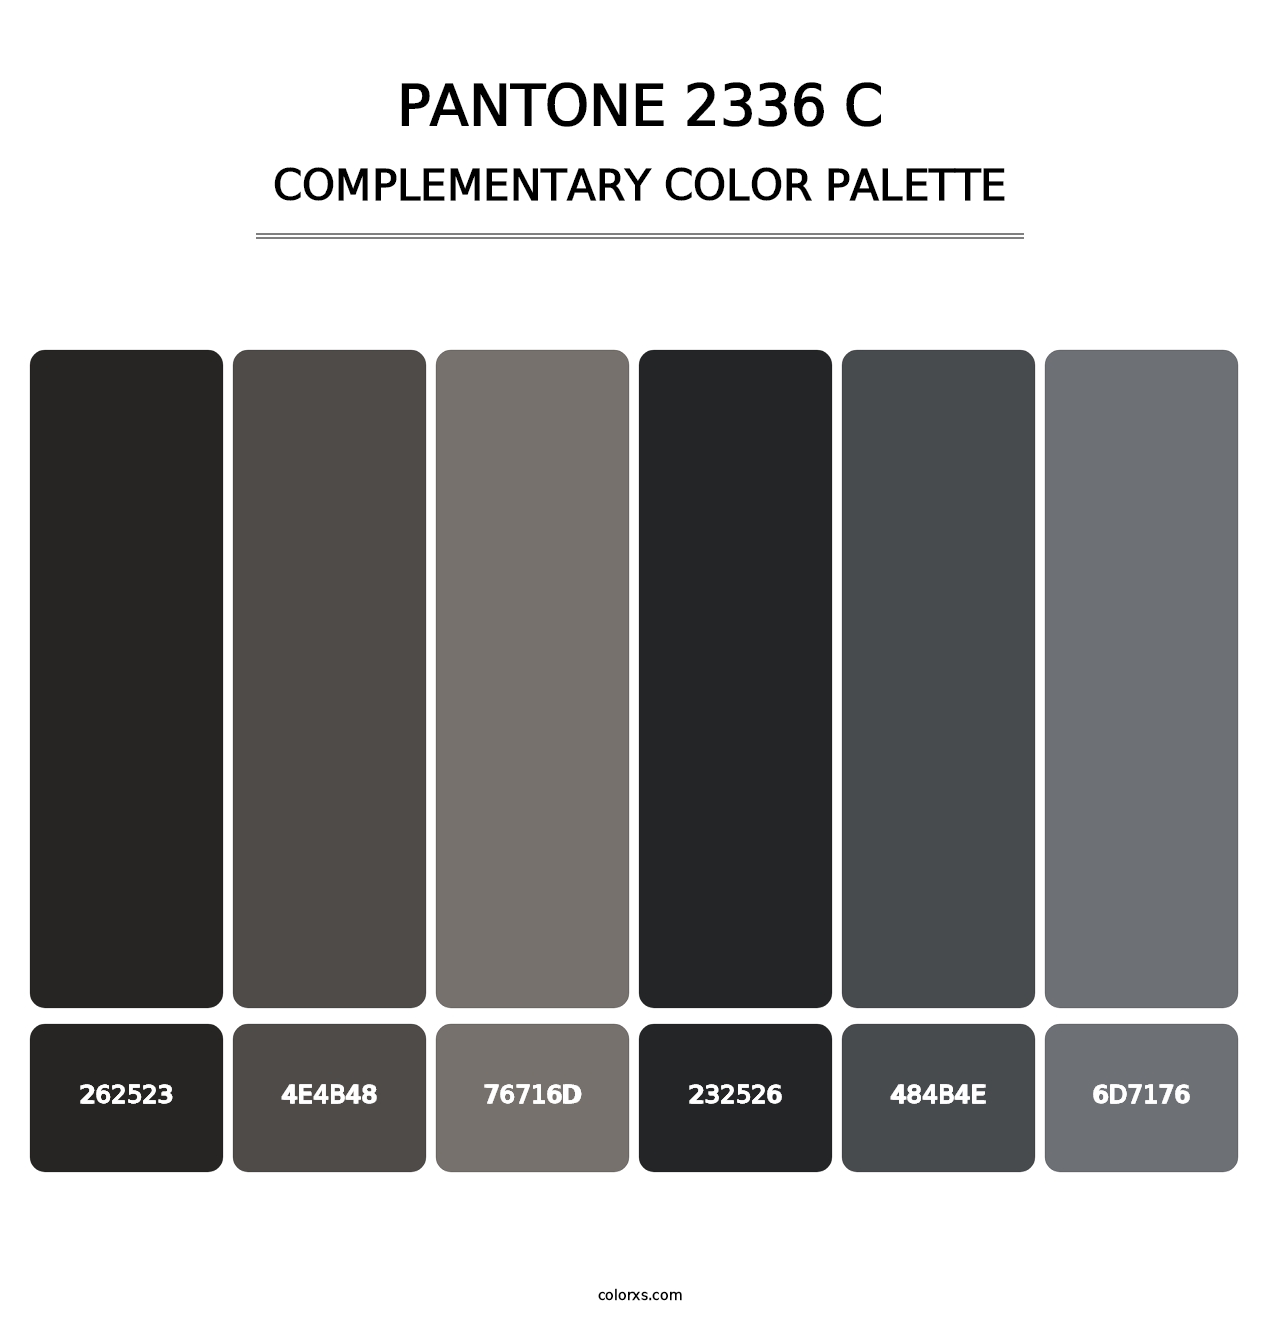 PANTONE 2336 C - Complementary Color Palette